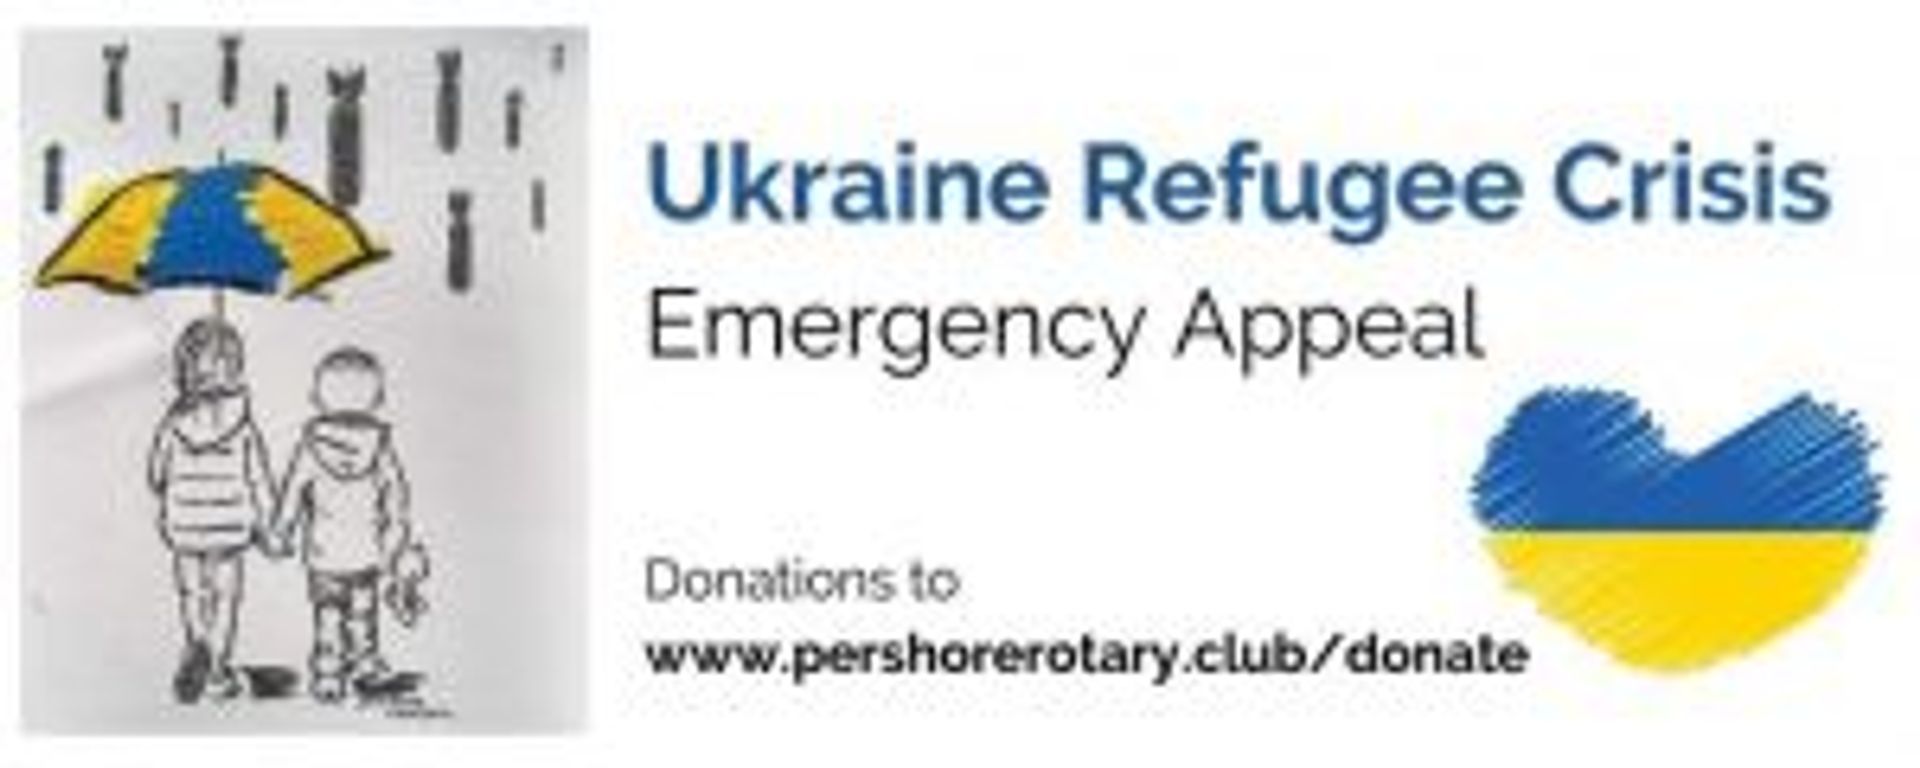 Ukraine refugee crisis - Emergency Appeal